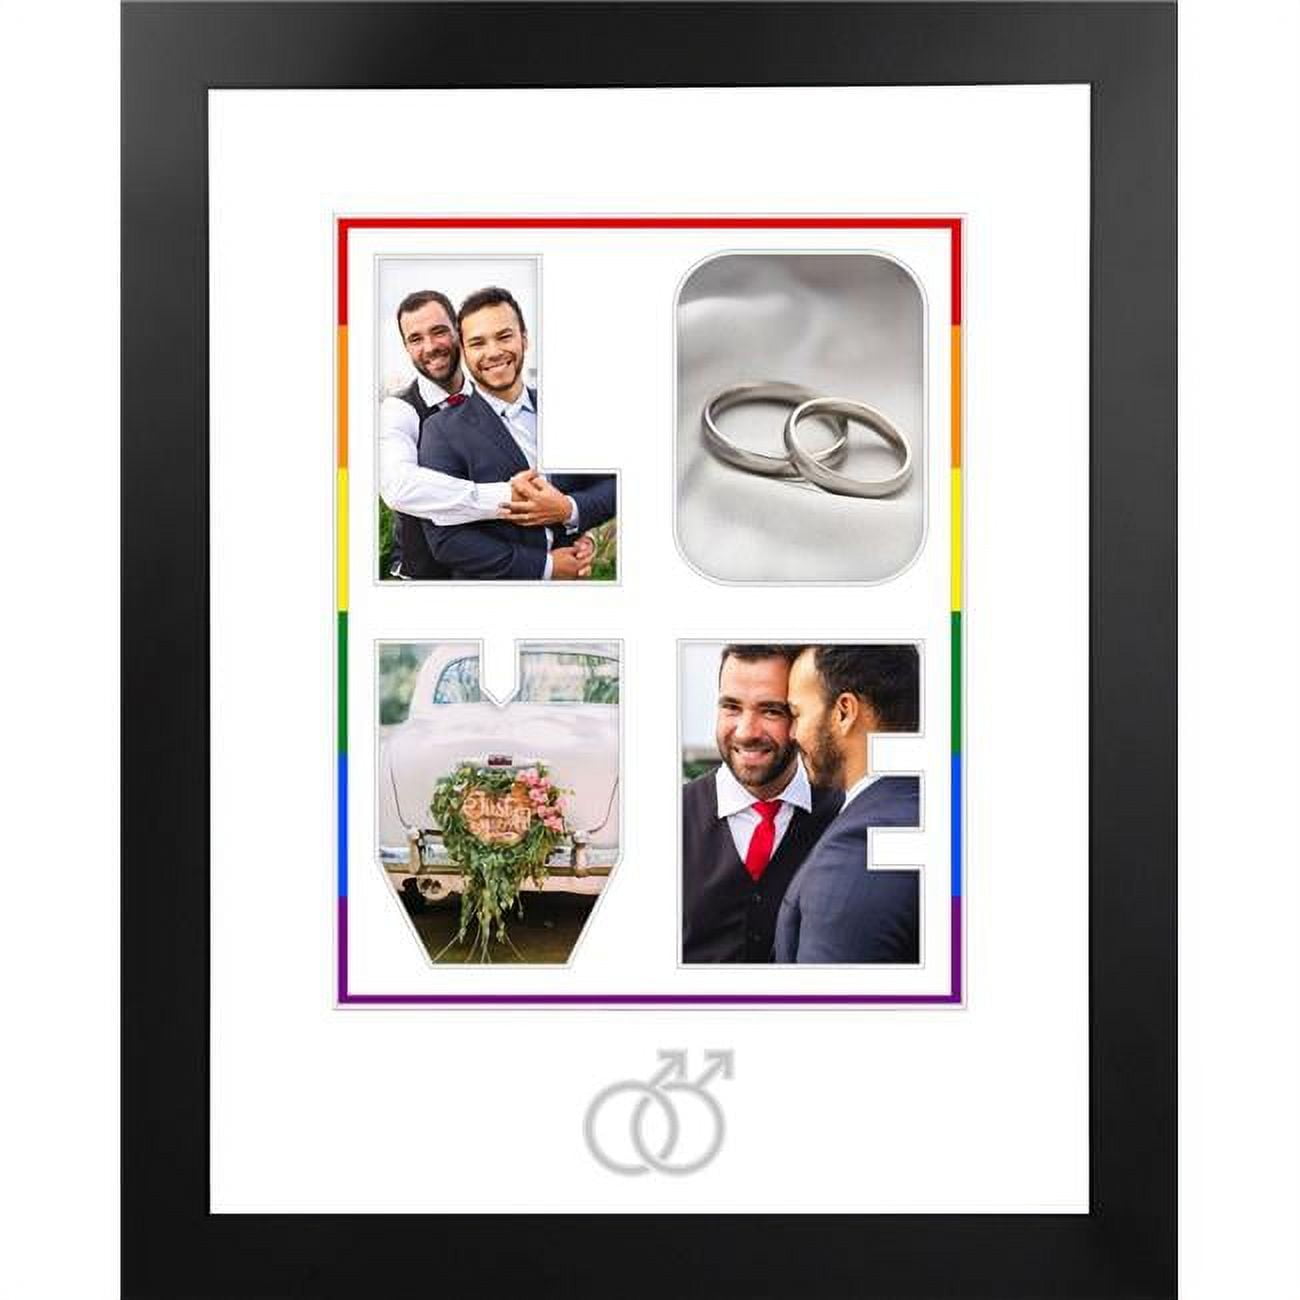 Ssmsws03 Lgbtq Pride Wedding Love Snapshot Photo Frame With White & Rainbow Mat - Silver Interlocking Man